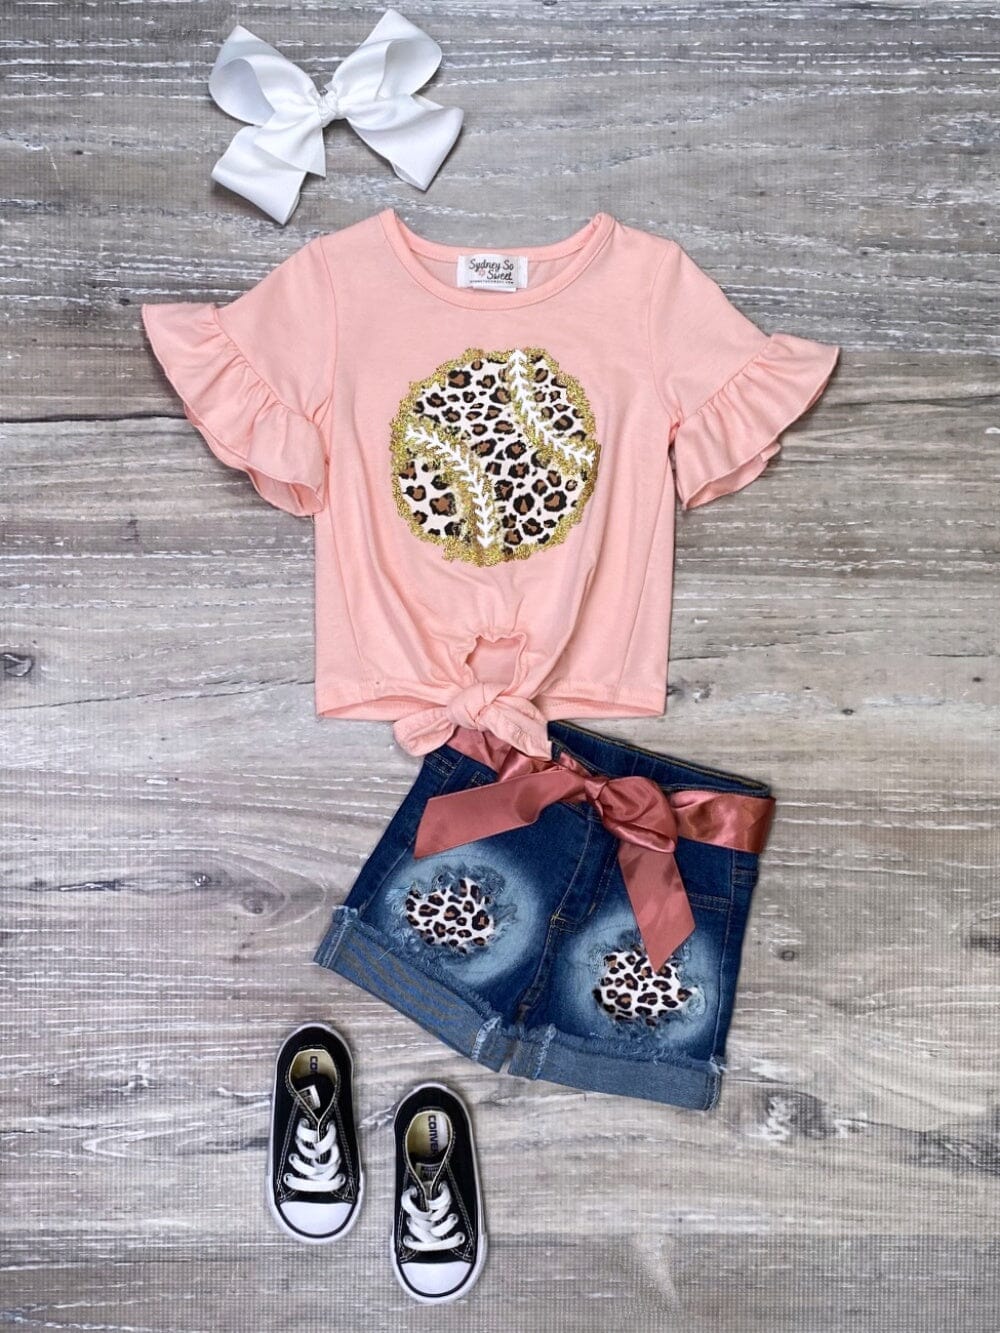 Wild About Baseball Cheetah Pink Denim Girls Shorts Outfit - Sydney So Sweet